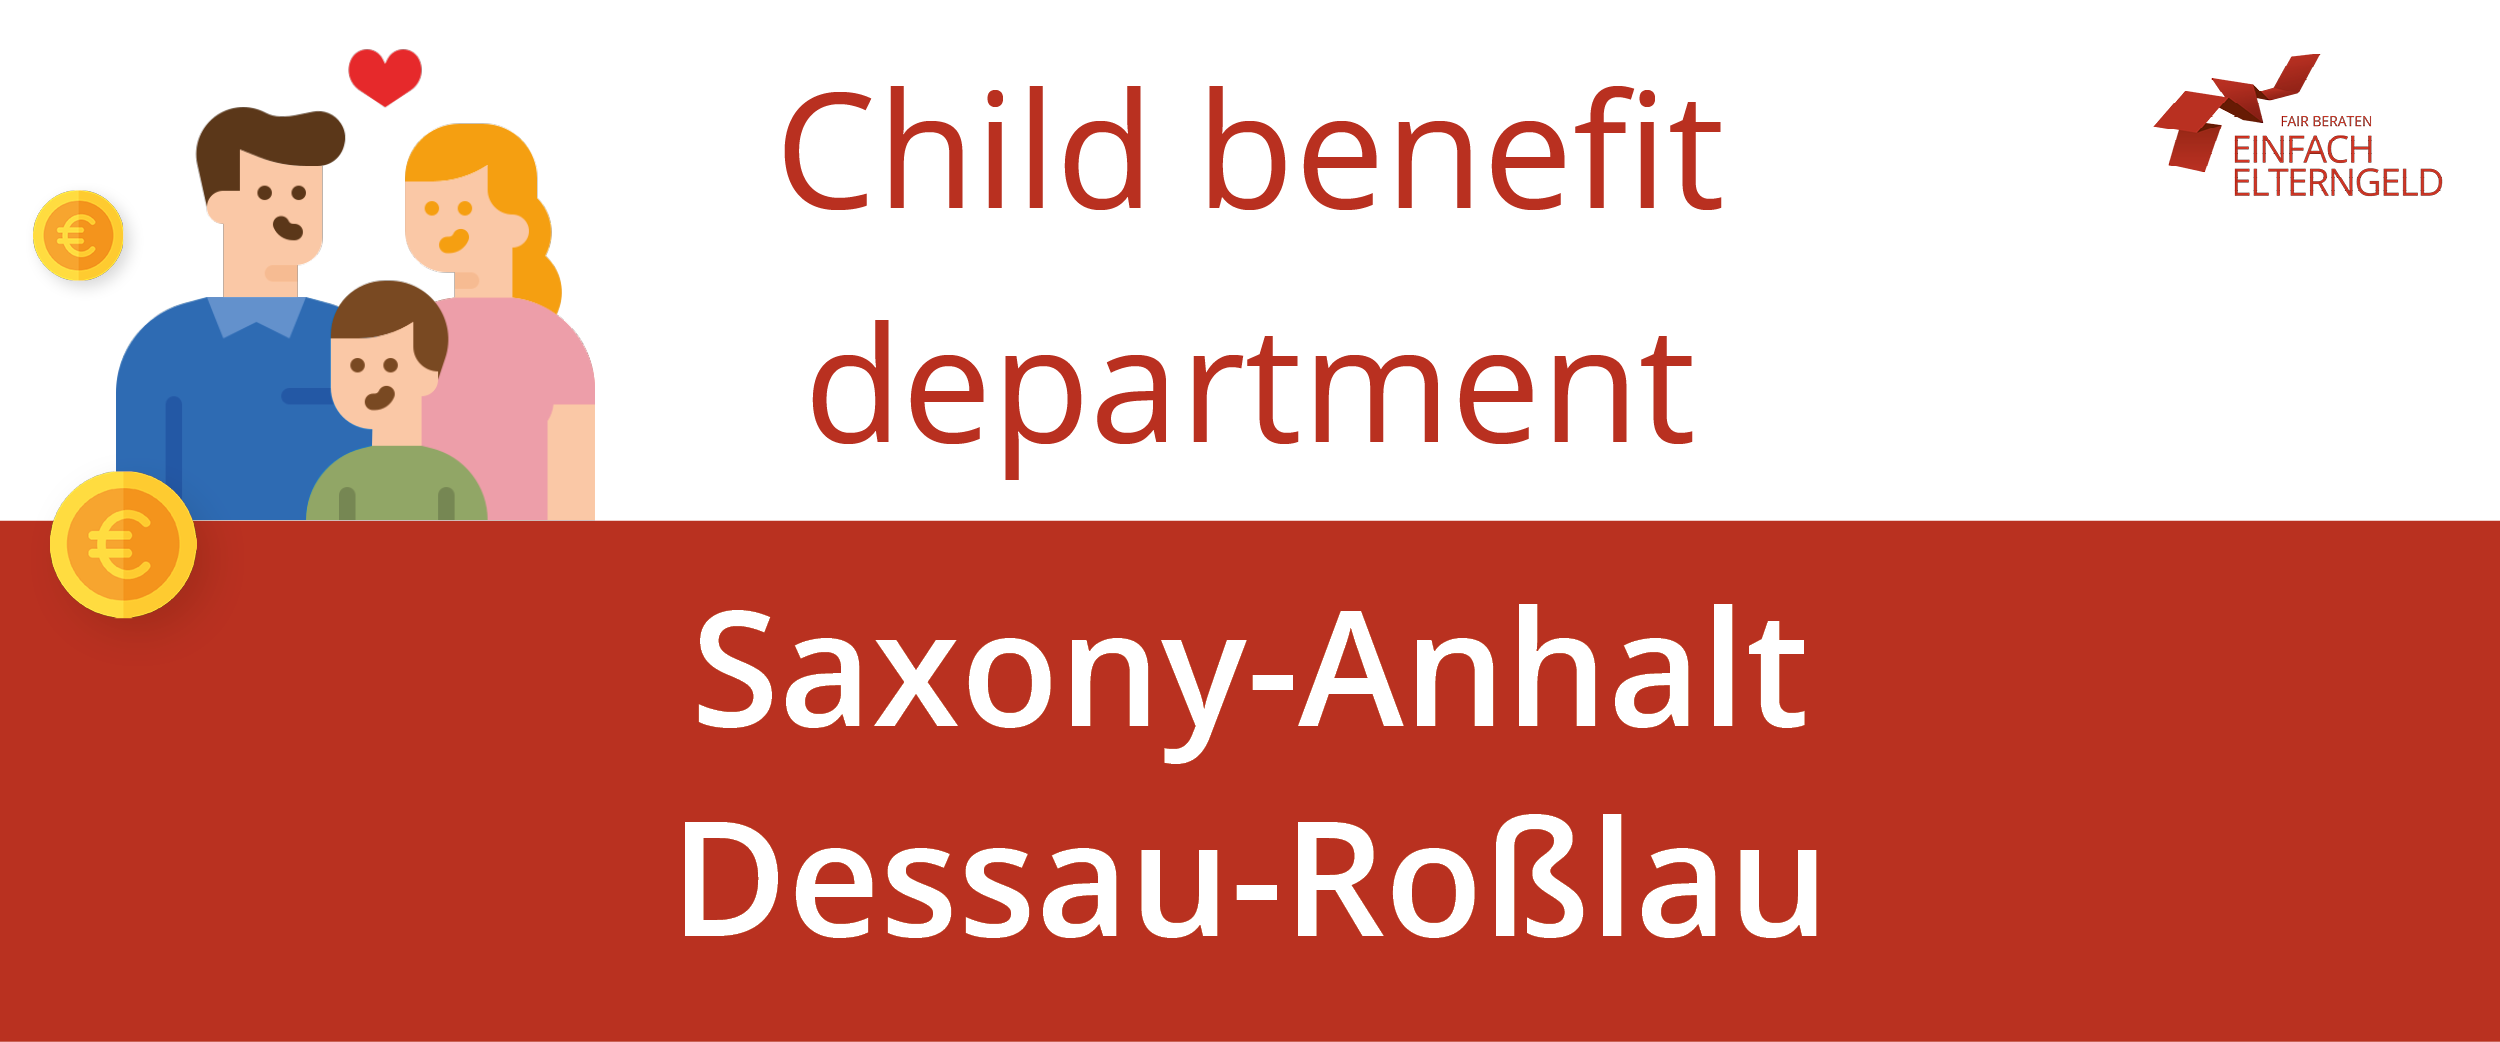 We present you the Child benefit department Saxony-Anhalt Dessau-Roßlau.